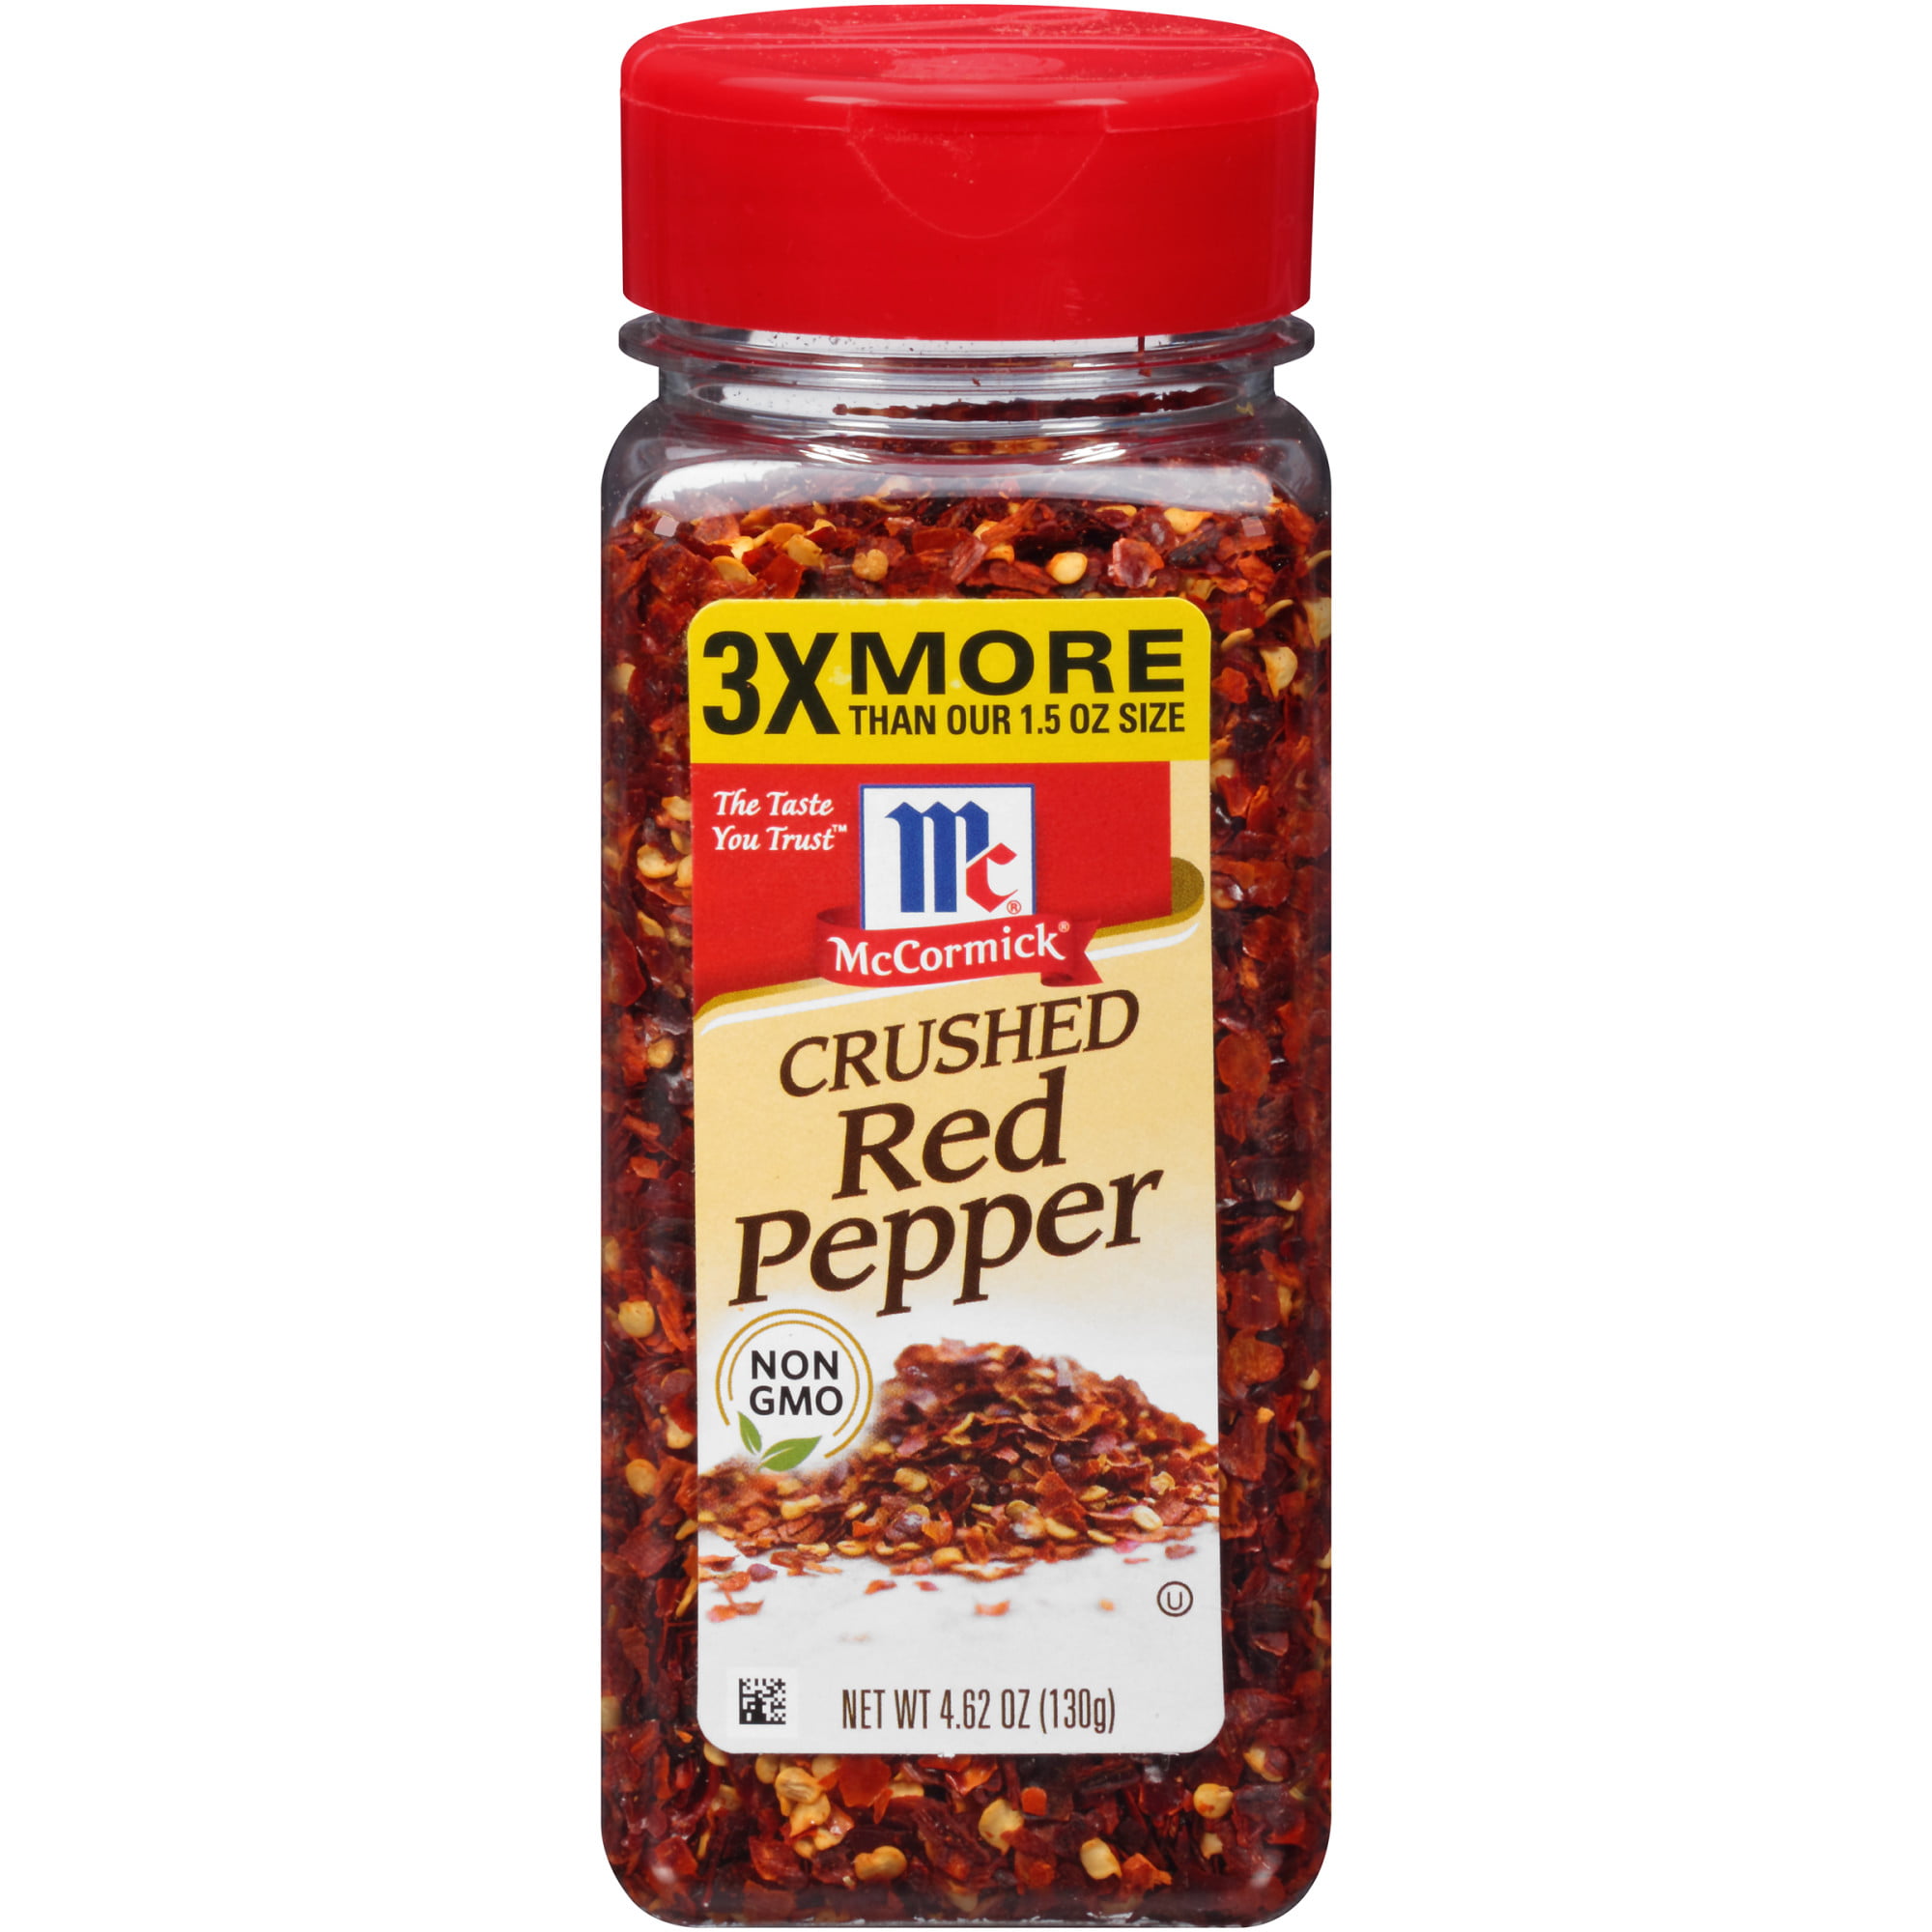 Pepper на русском языке. Pepper crushed Red. Kirmizi biber приправа. Red Pepper духи. Pepper приправа picture for Kids.